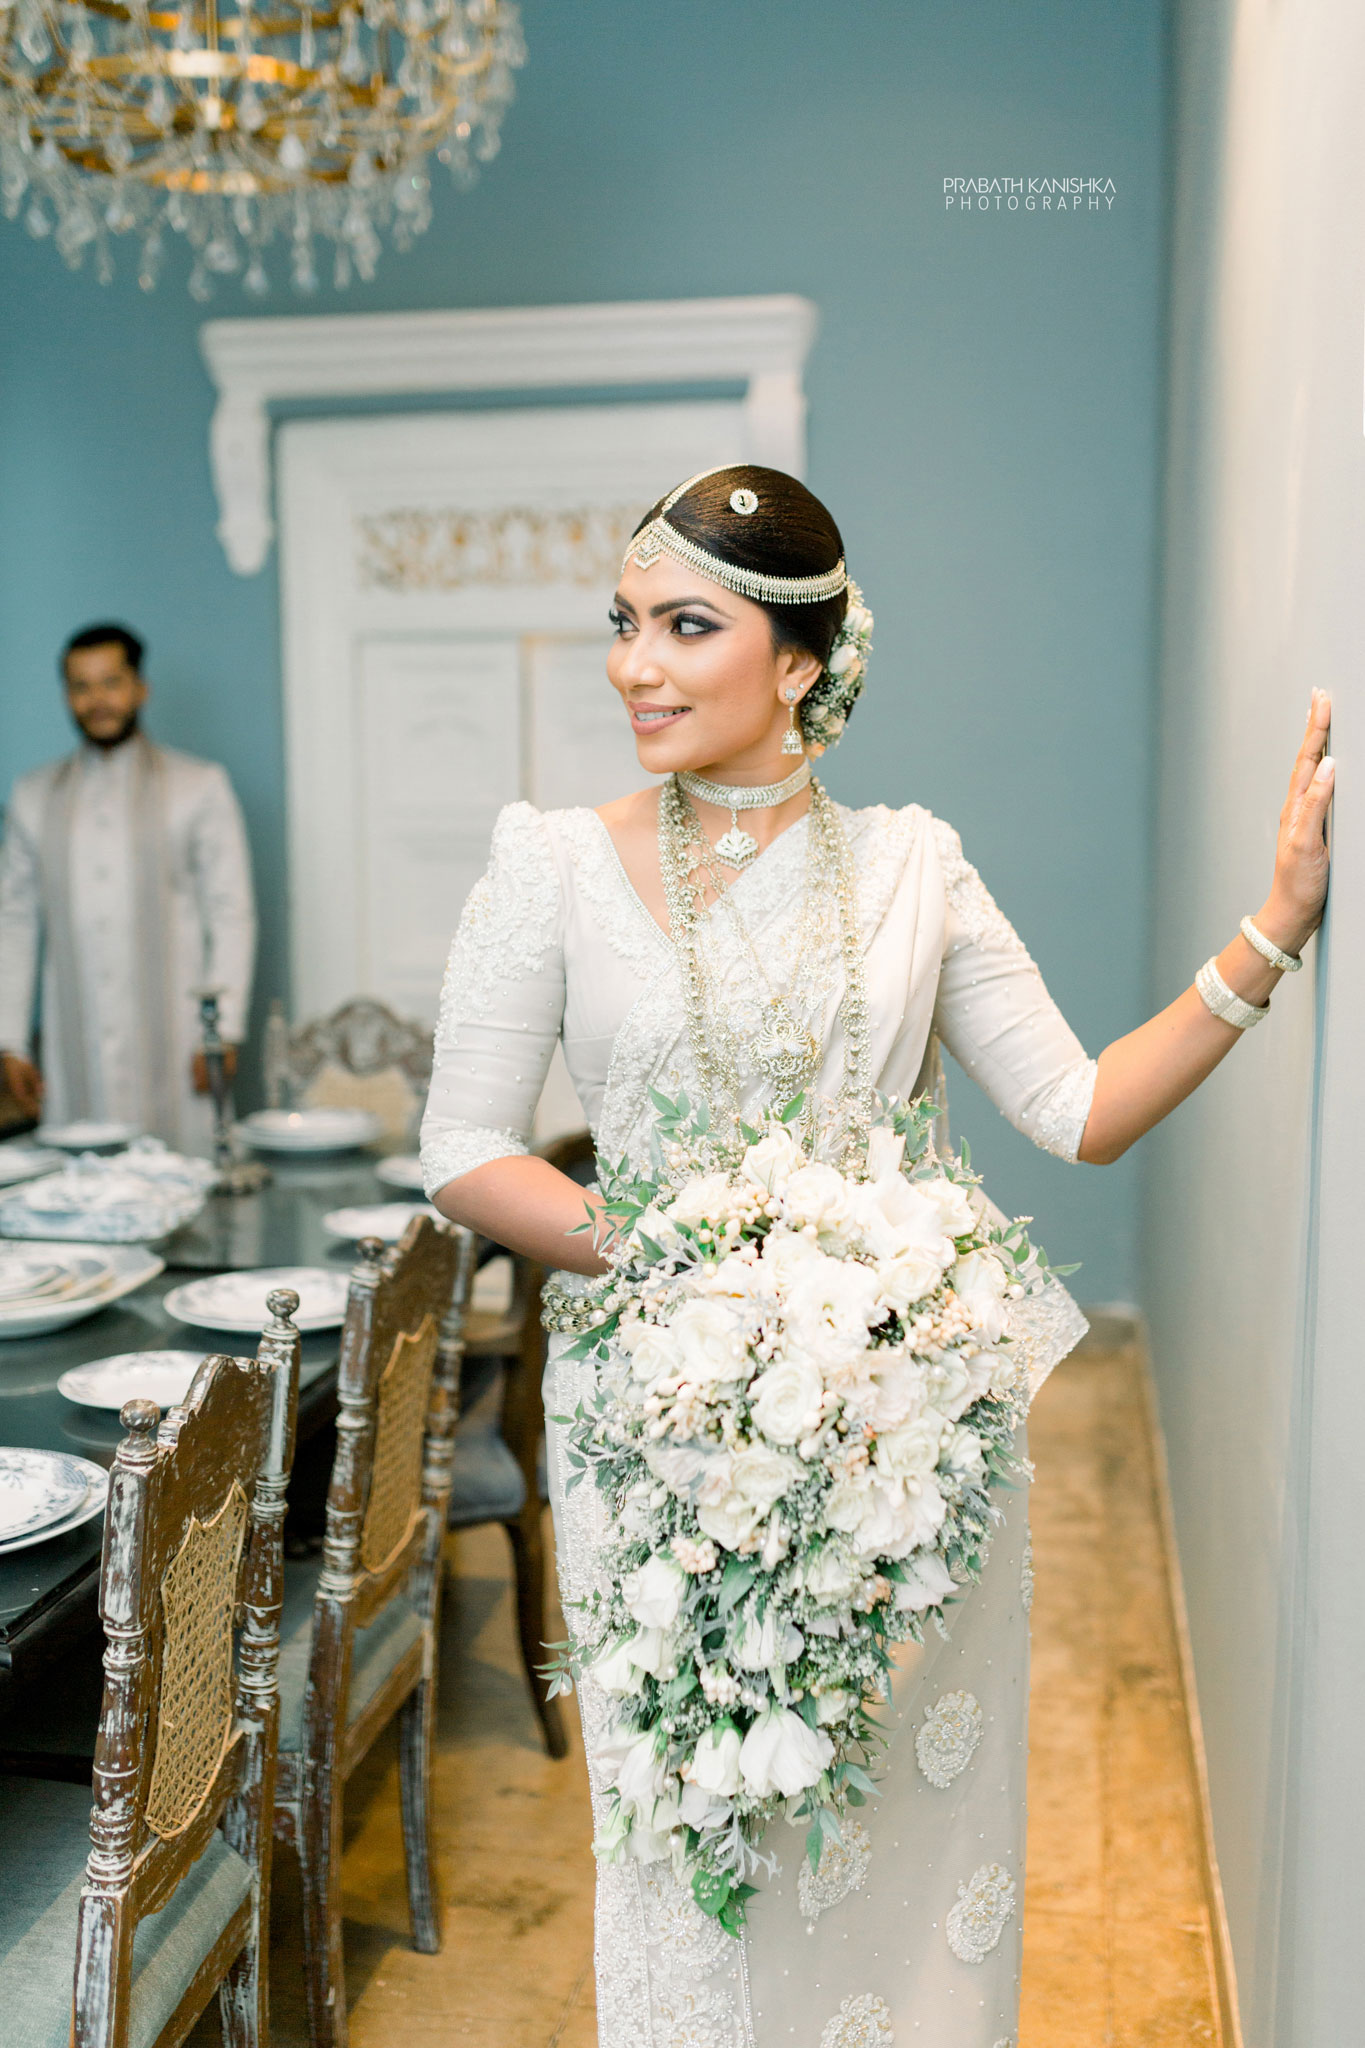 Nayani & Supun - Prabath Kanishka Wedding Photography